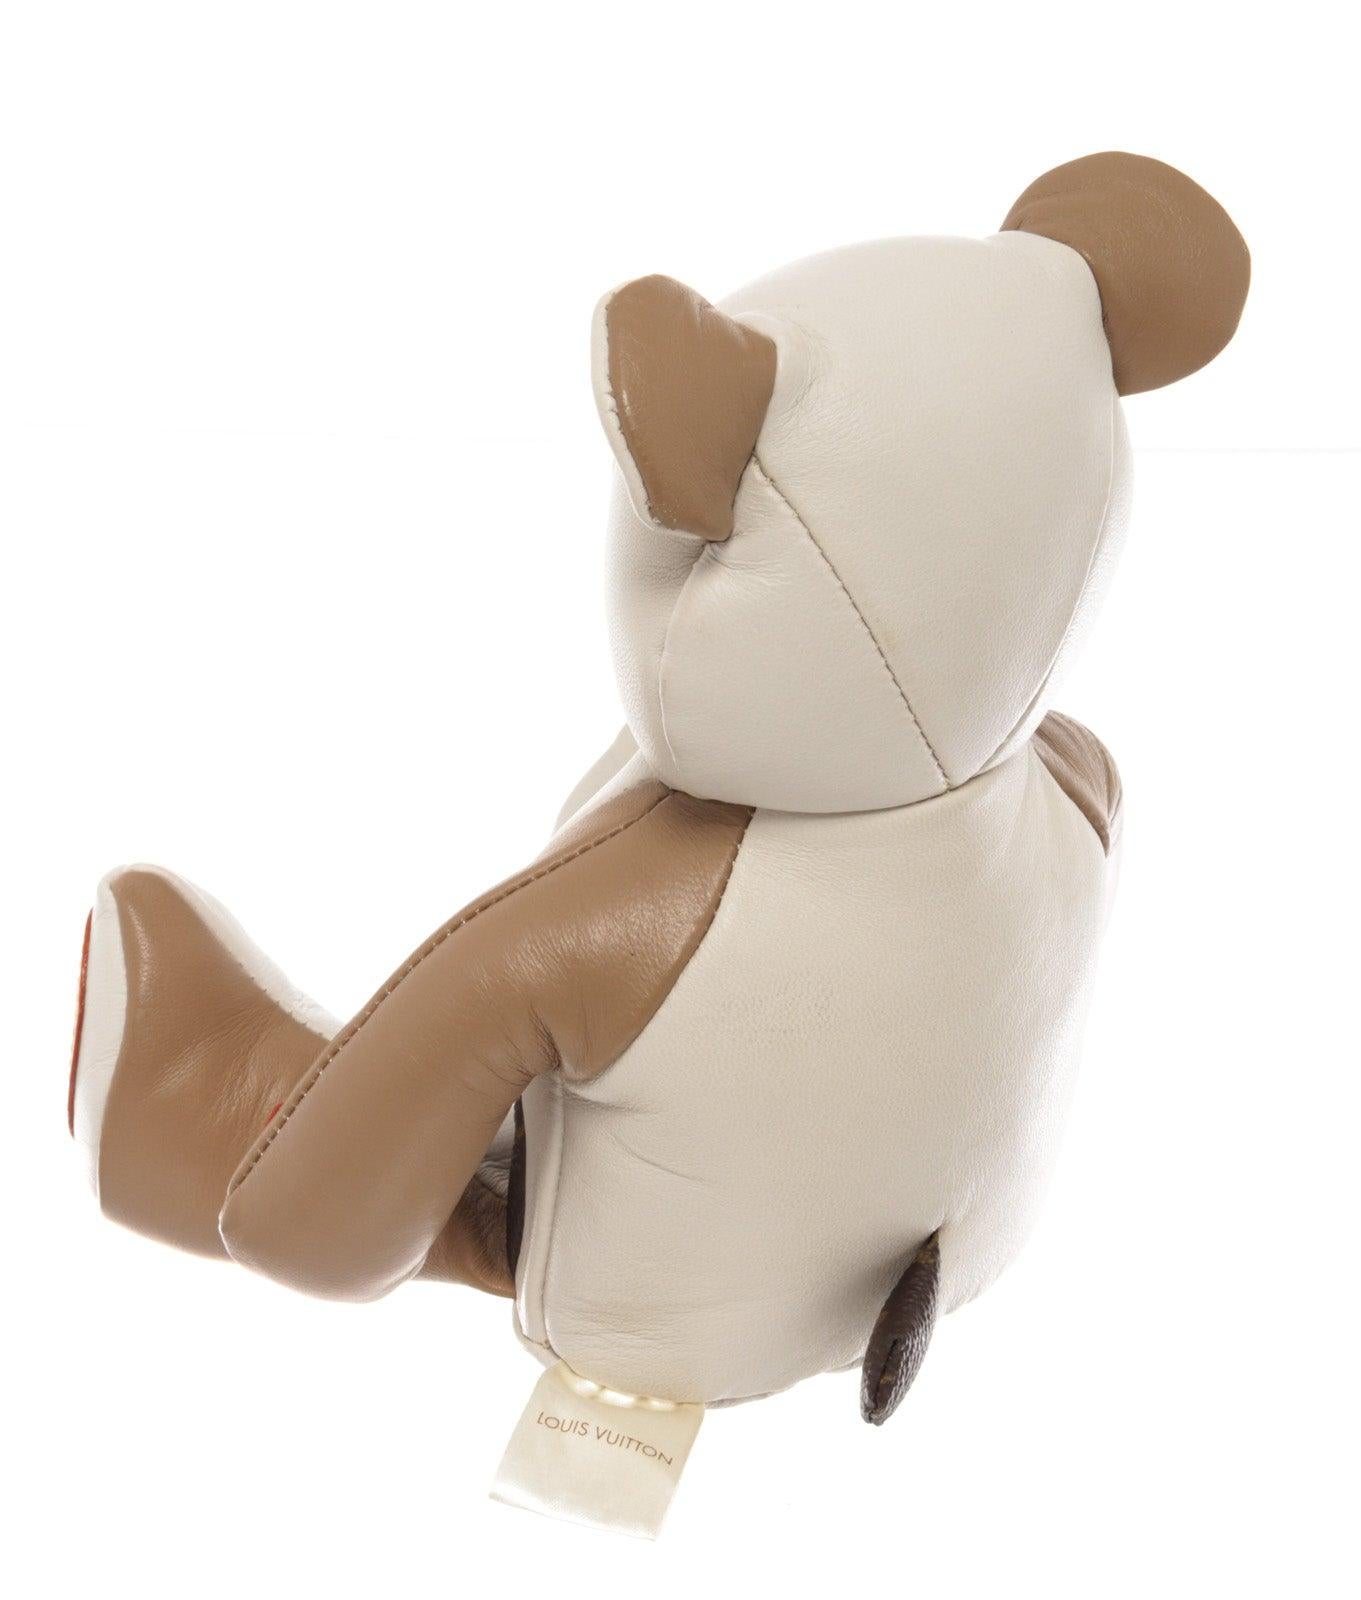 Louis Vuitton Teddy Bear - 6 For Sale on 1stDibs